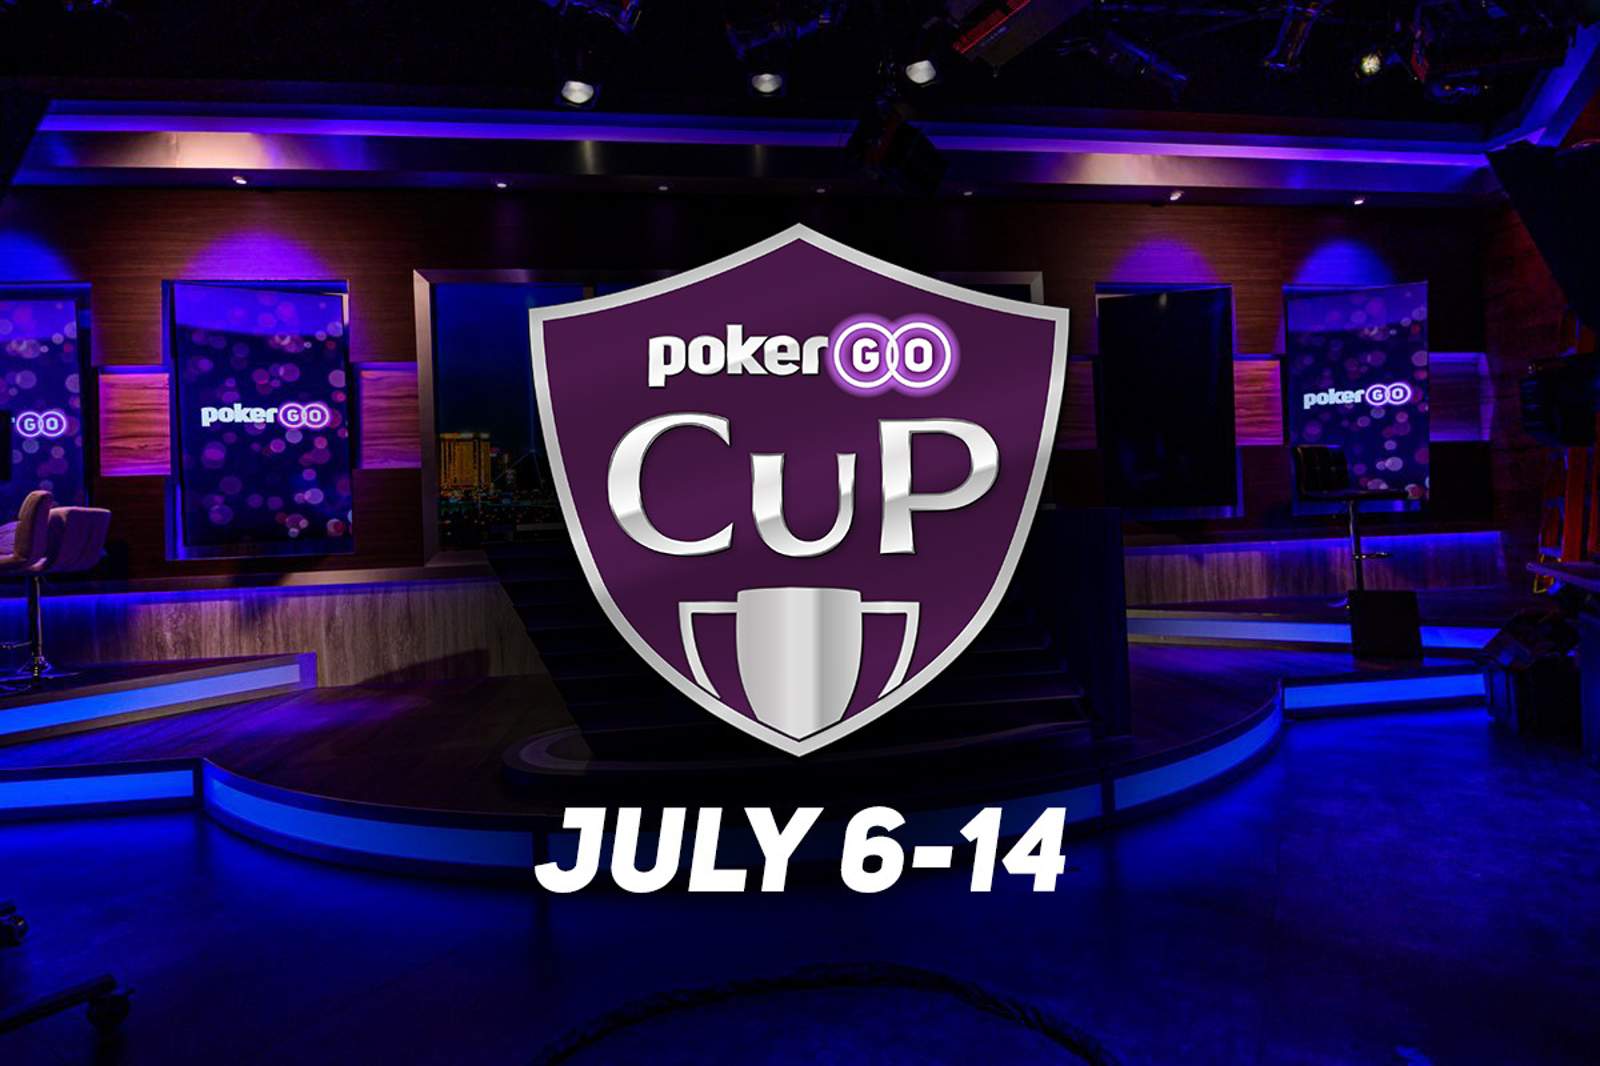 PokerGO Cup 2021 Schedule: July 6-14